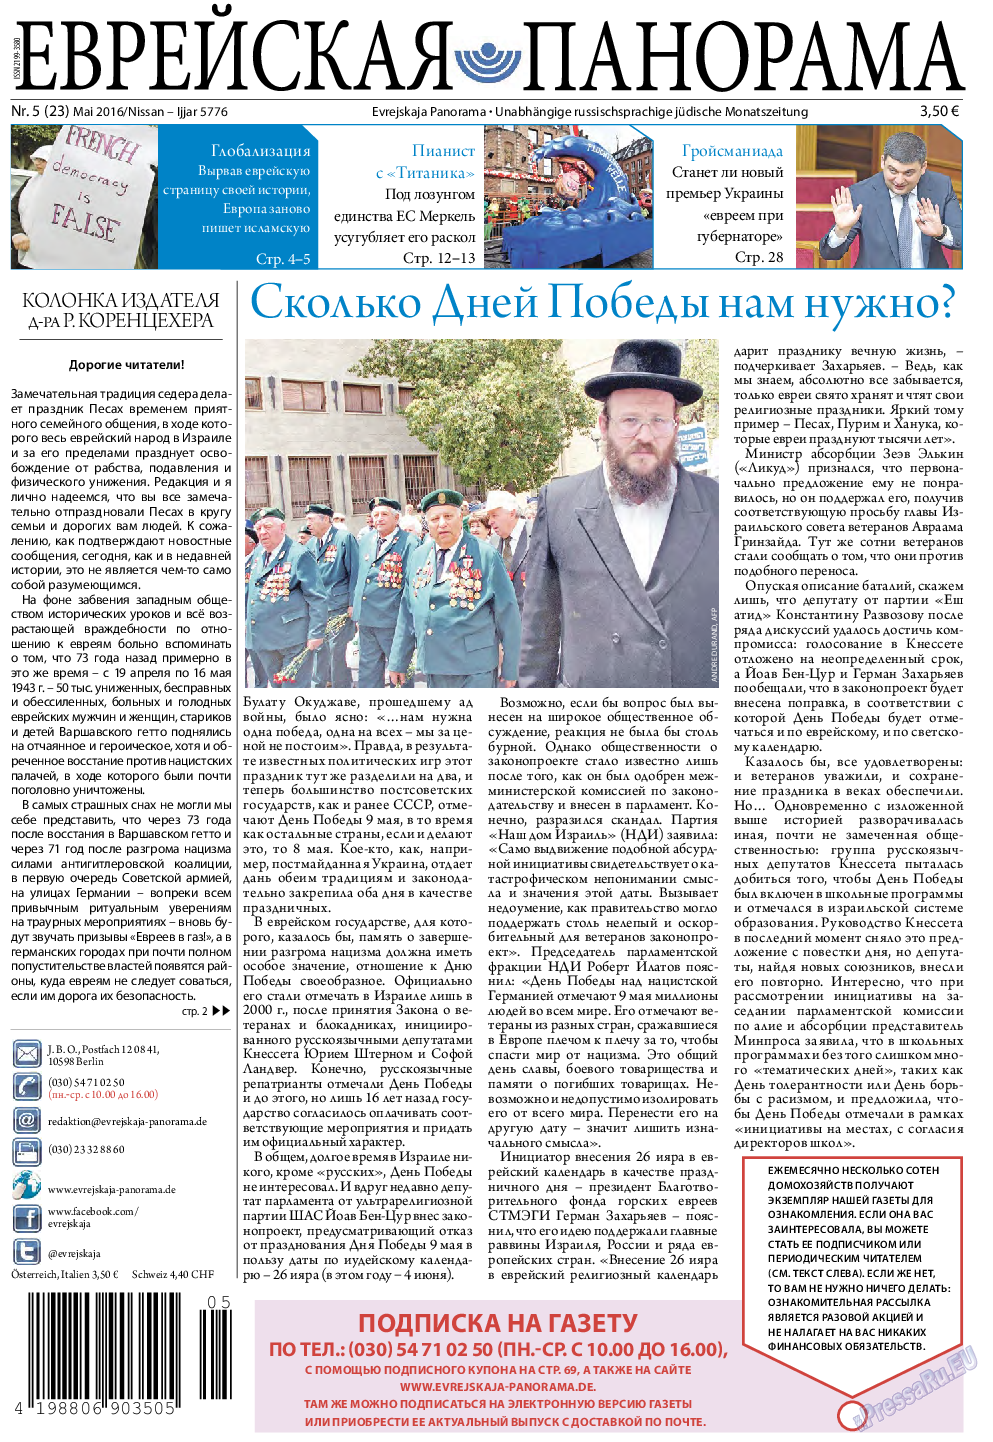 Еврейская панорама, газета. 2016 №5 стр.1